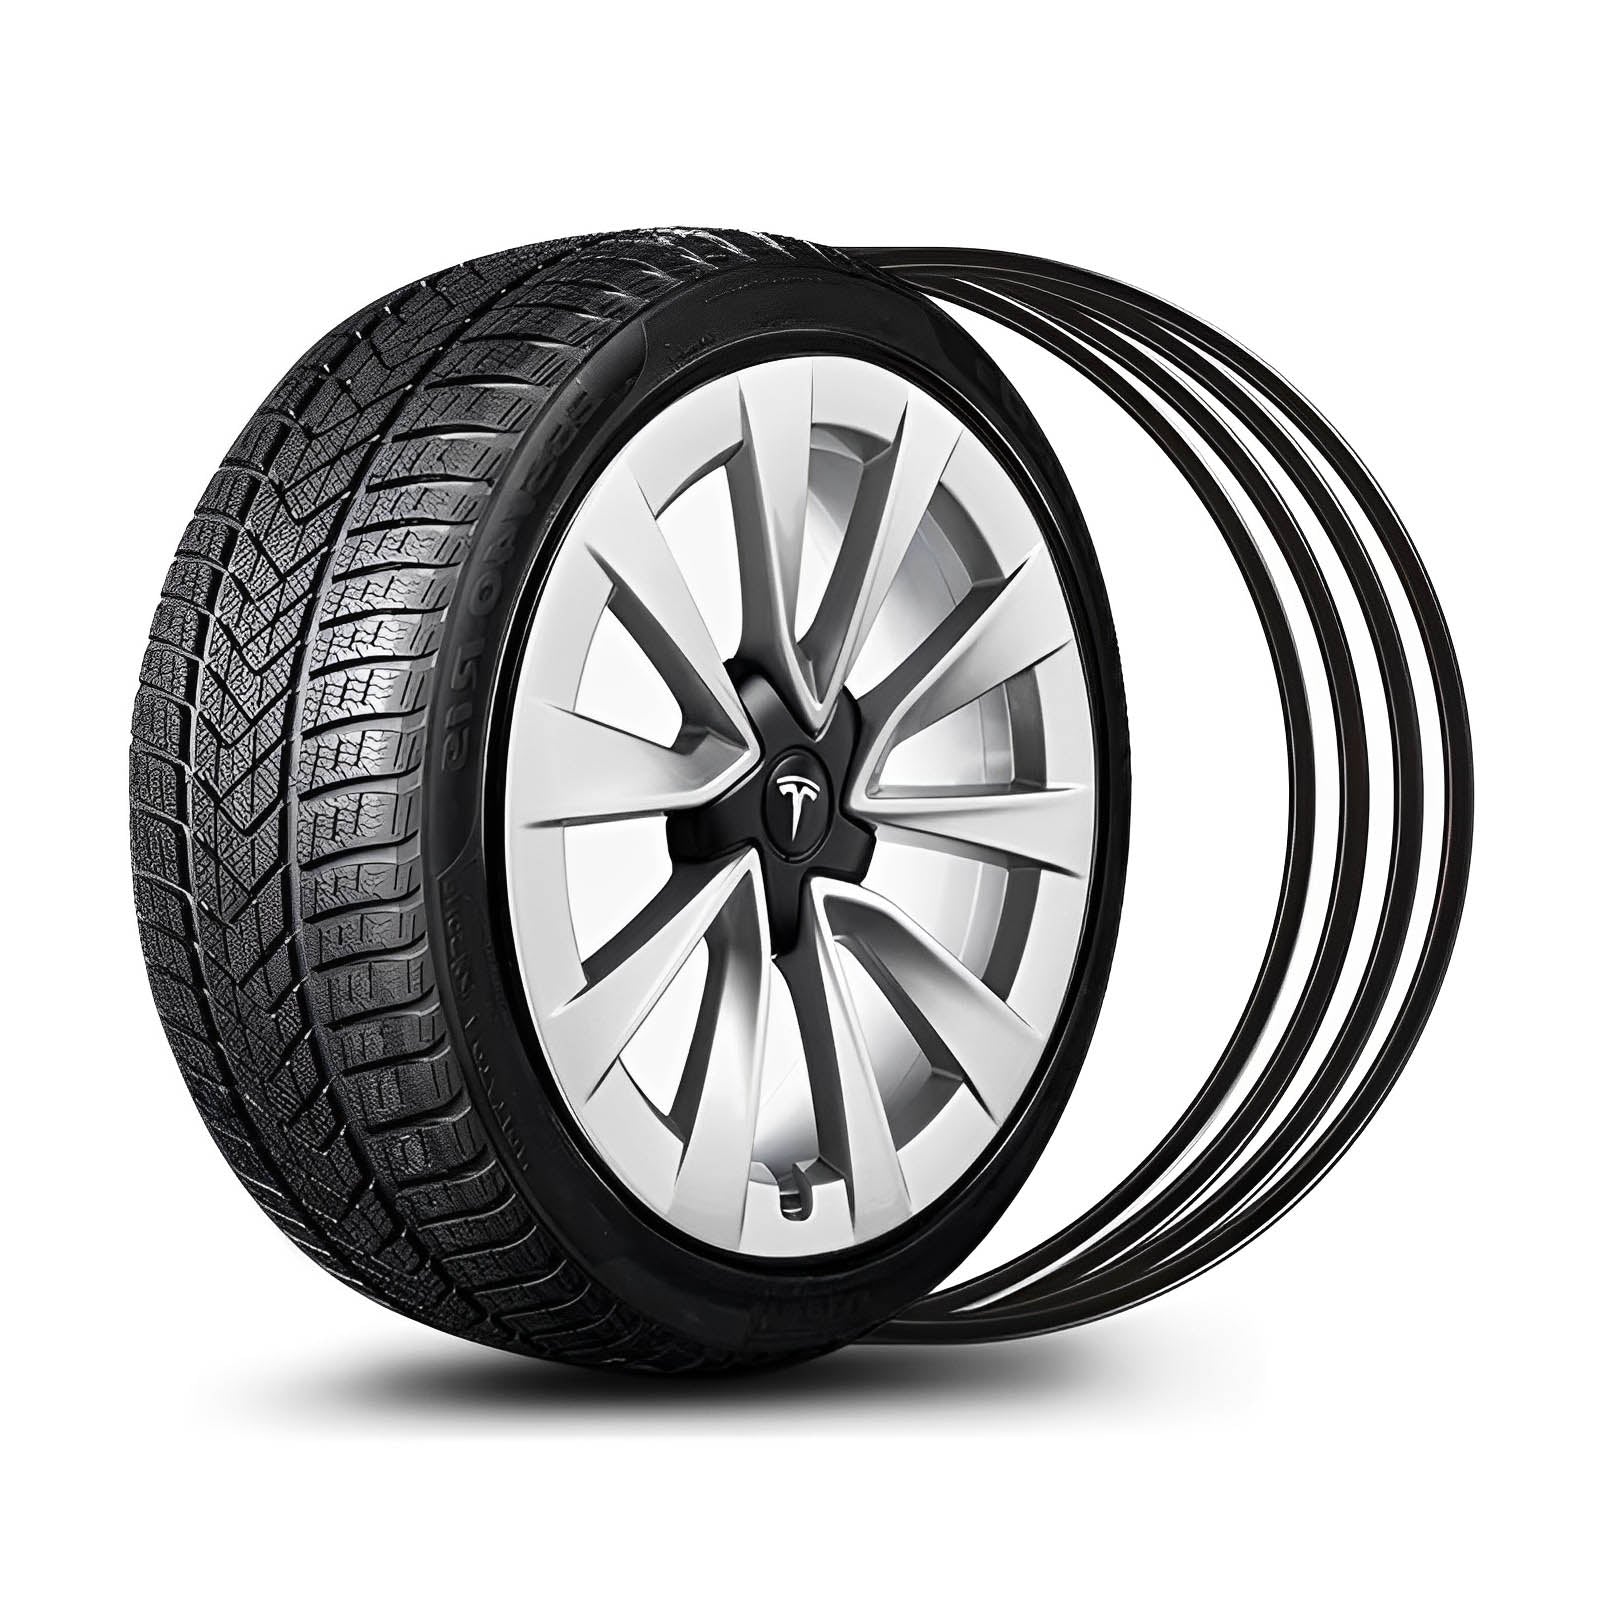 EVAAM™ UPGRADE! Aluminum Alloy Wheel Rim Protector For Tesla All Models (4 PCS) (2012-2023) - EVAAM